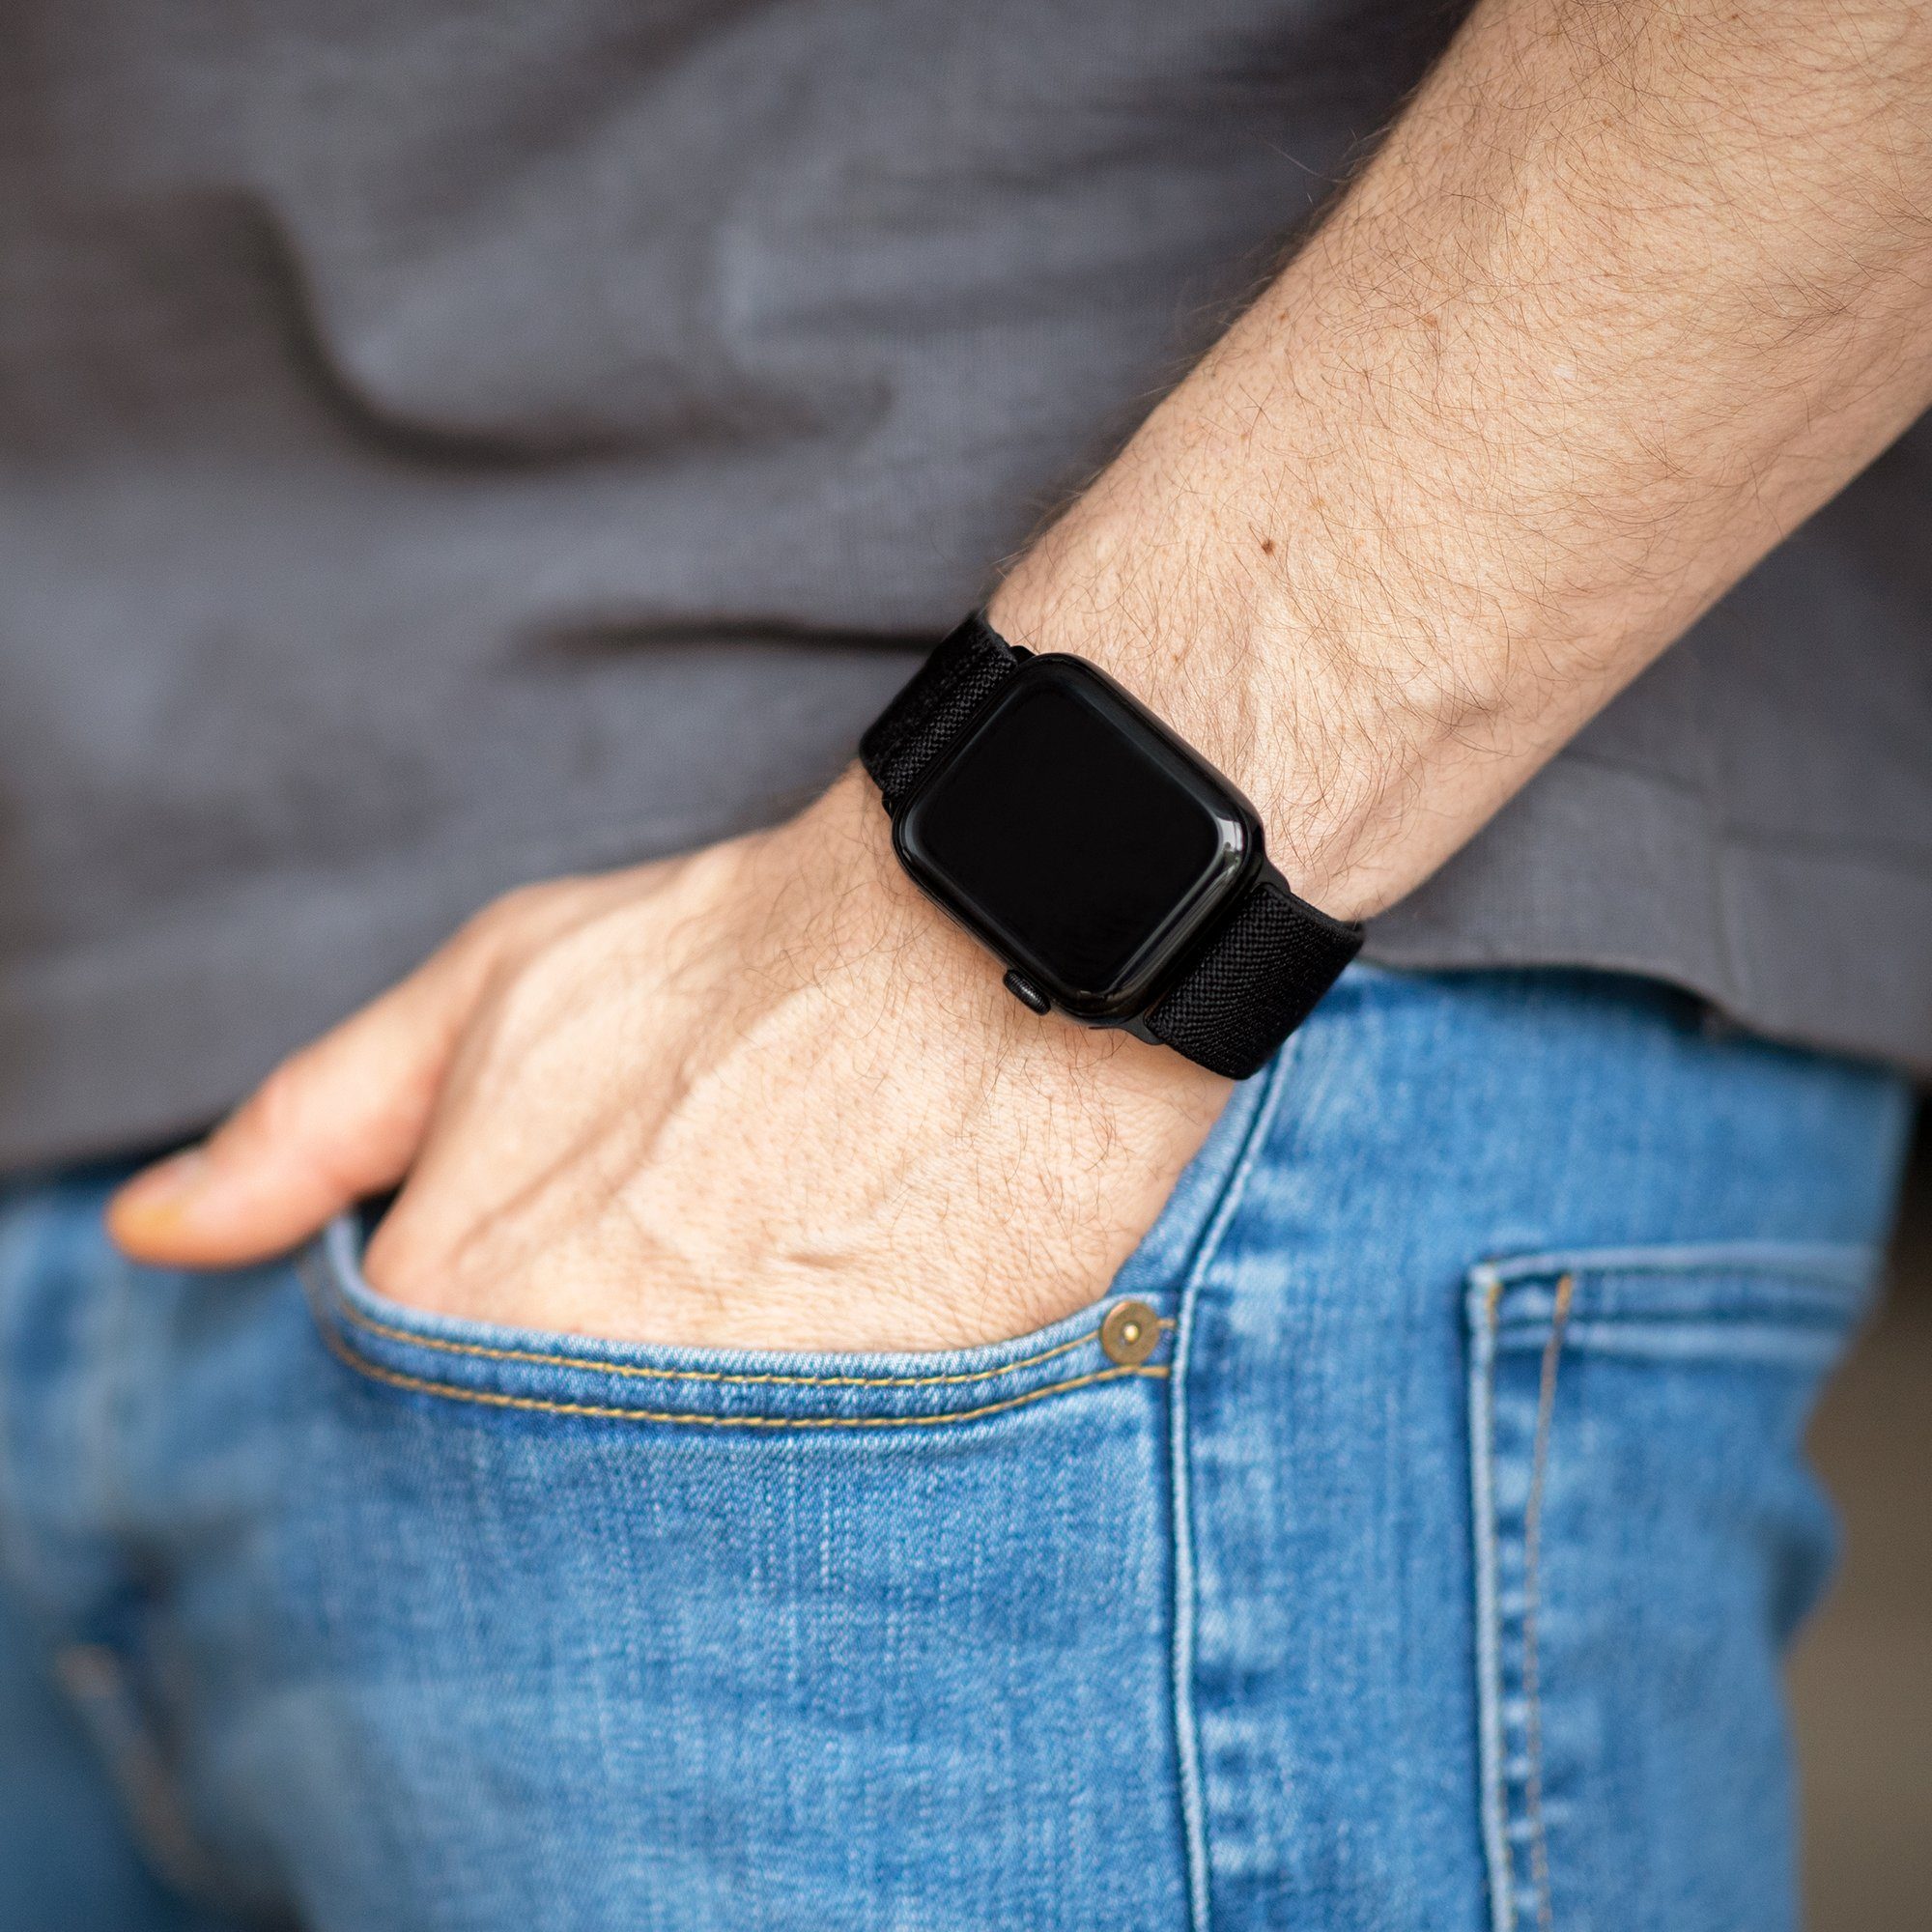 (40mm), Artwizz SE & Uhrenarmband Flex, 9-7 (41mm), Series Schwarz, 6-4 Adapter, (38mm) Textil Apple Smartwatch-Armband mit WatchBand 3-1 Watch